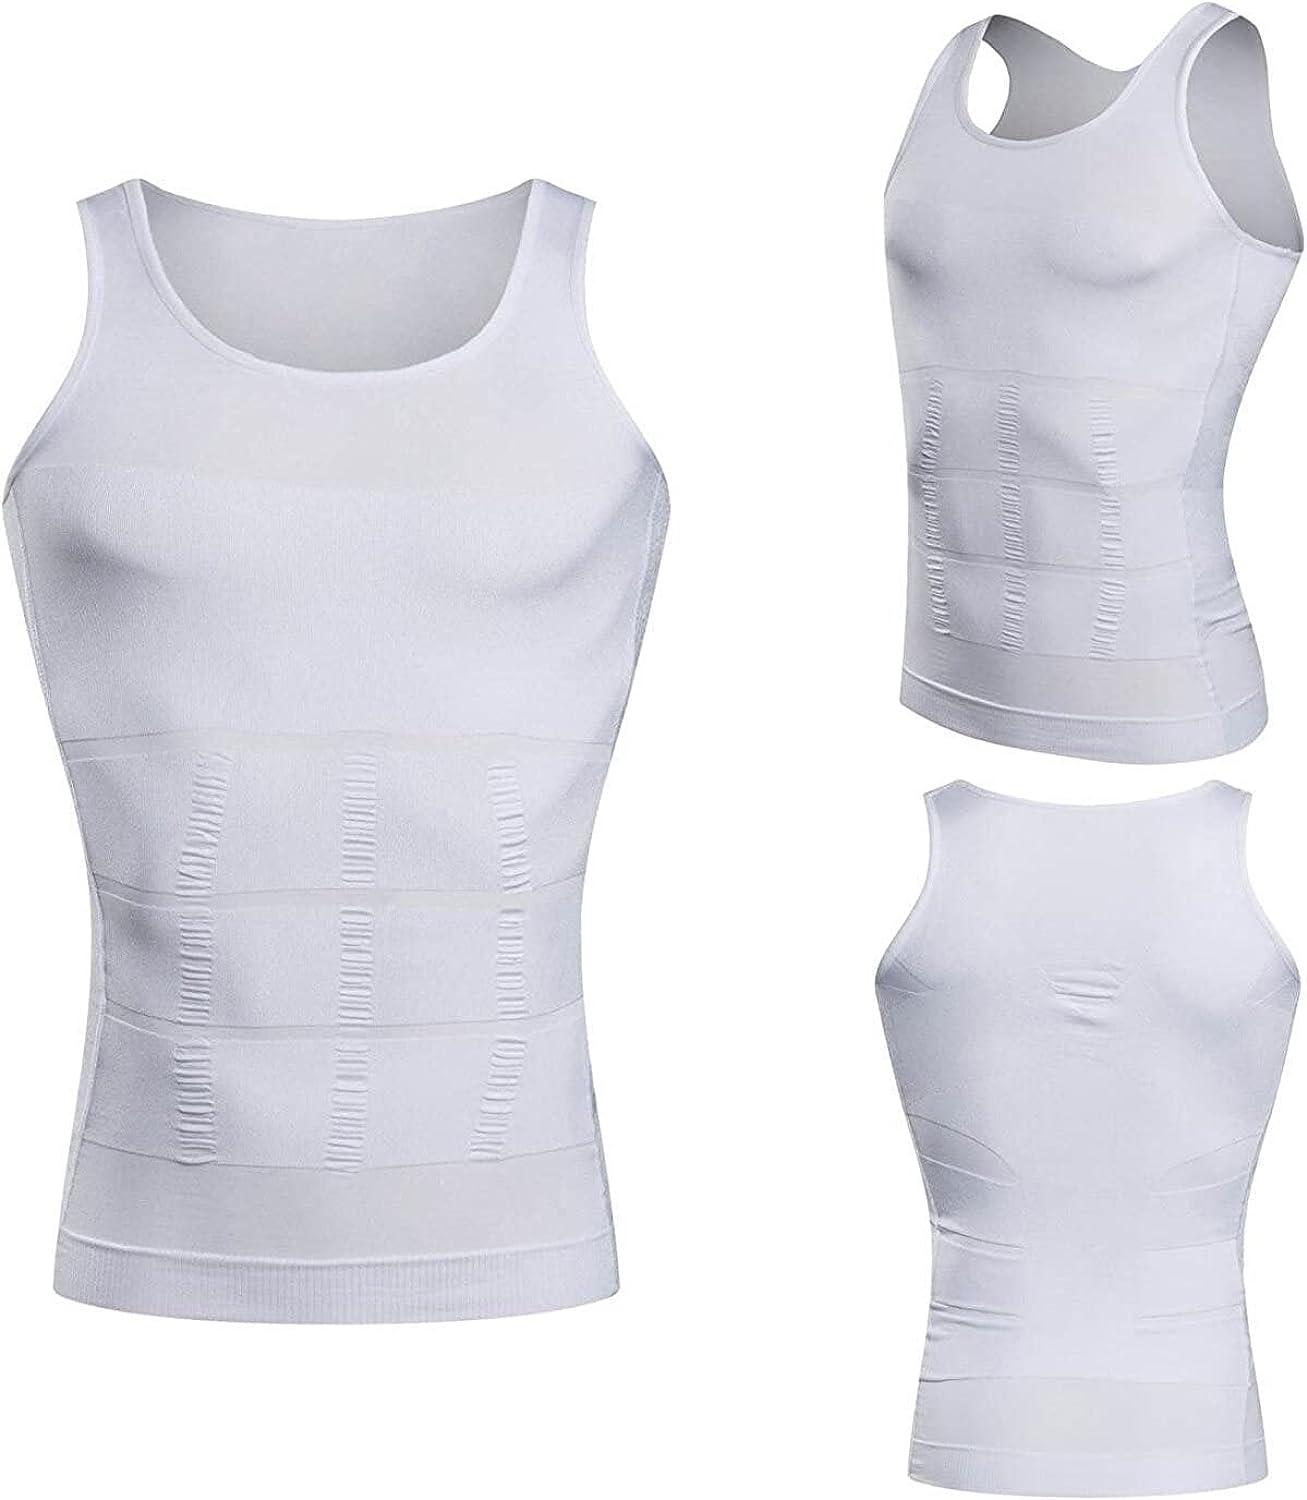 Men Body Shapers Fitness Elastic Beauty Abdomen Tight Fitting Sleeveless  Shirt Tank Tops Slimming Boobs Shaping Vest